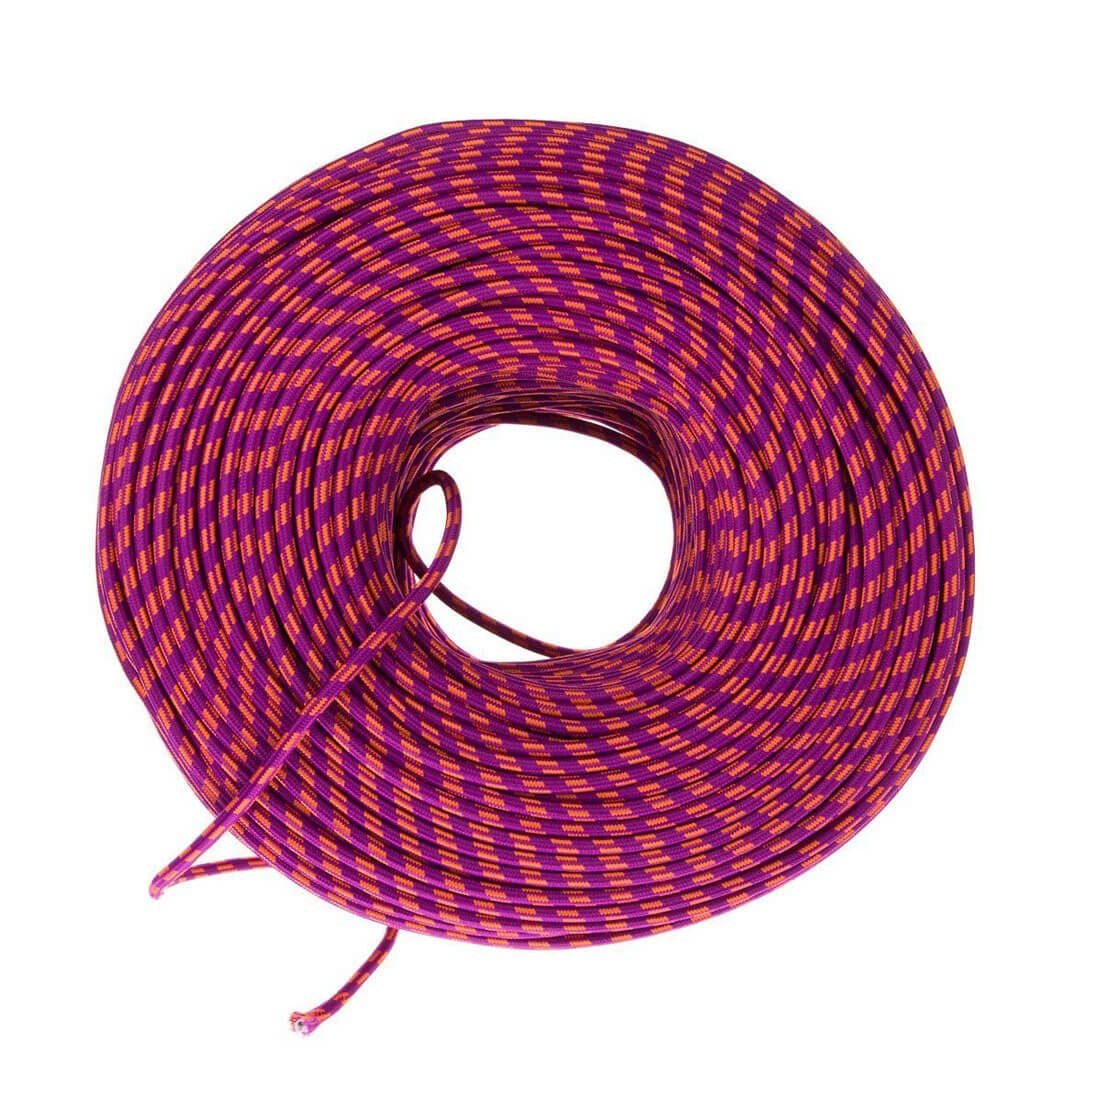 DIY Fabric Wire by the Foot - Magenta & Orange Stripe